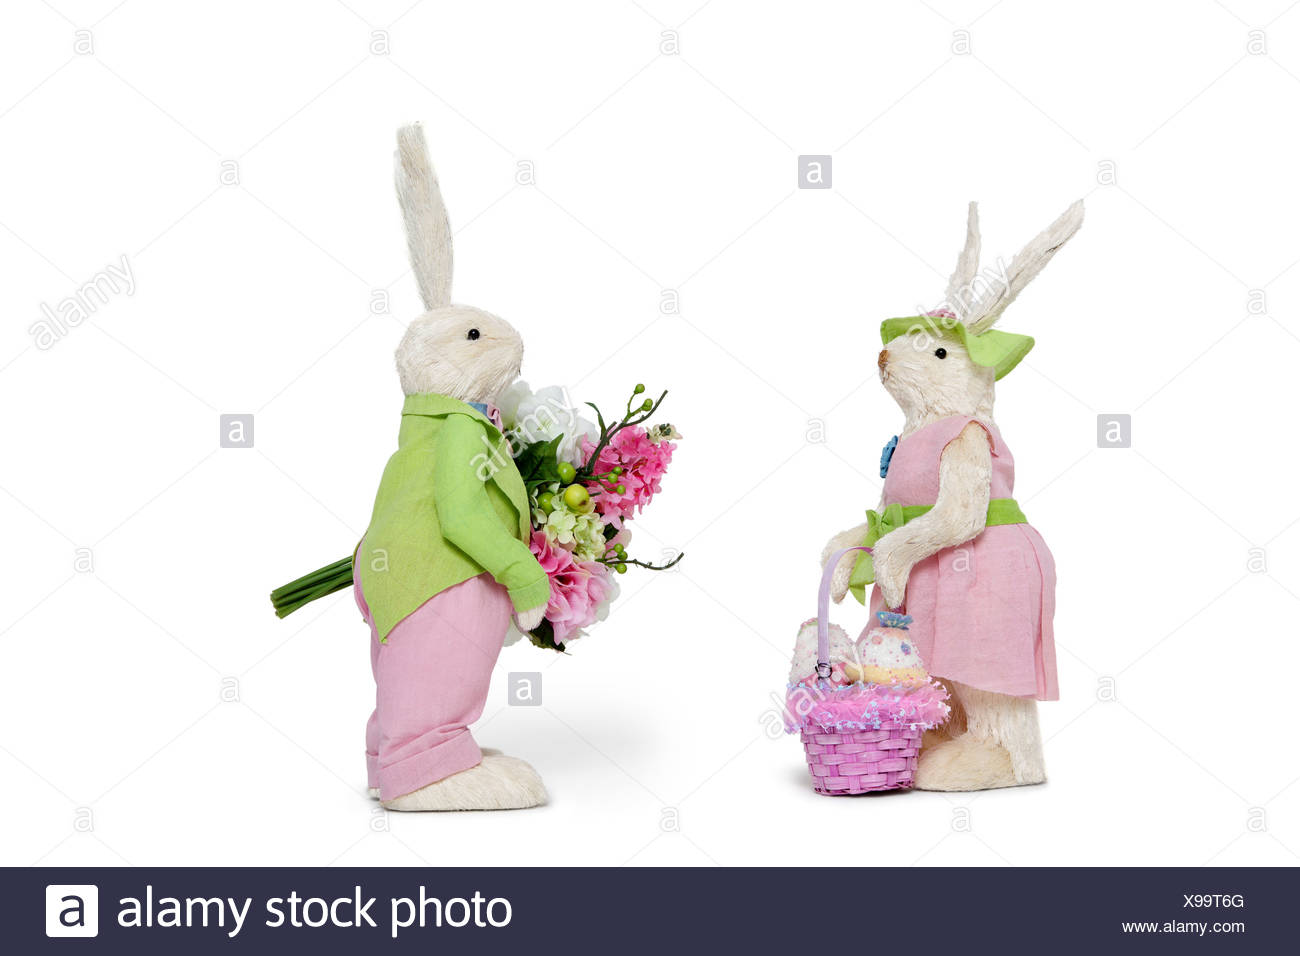 male or female rabbit